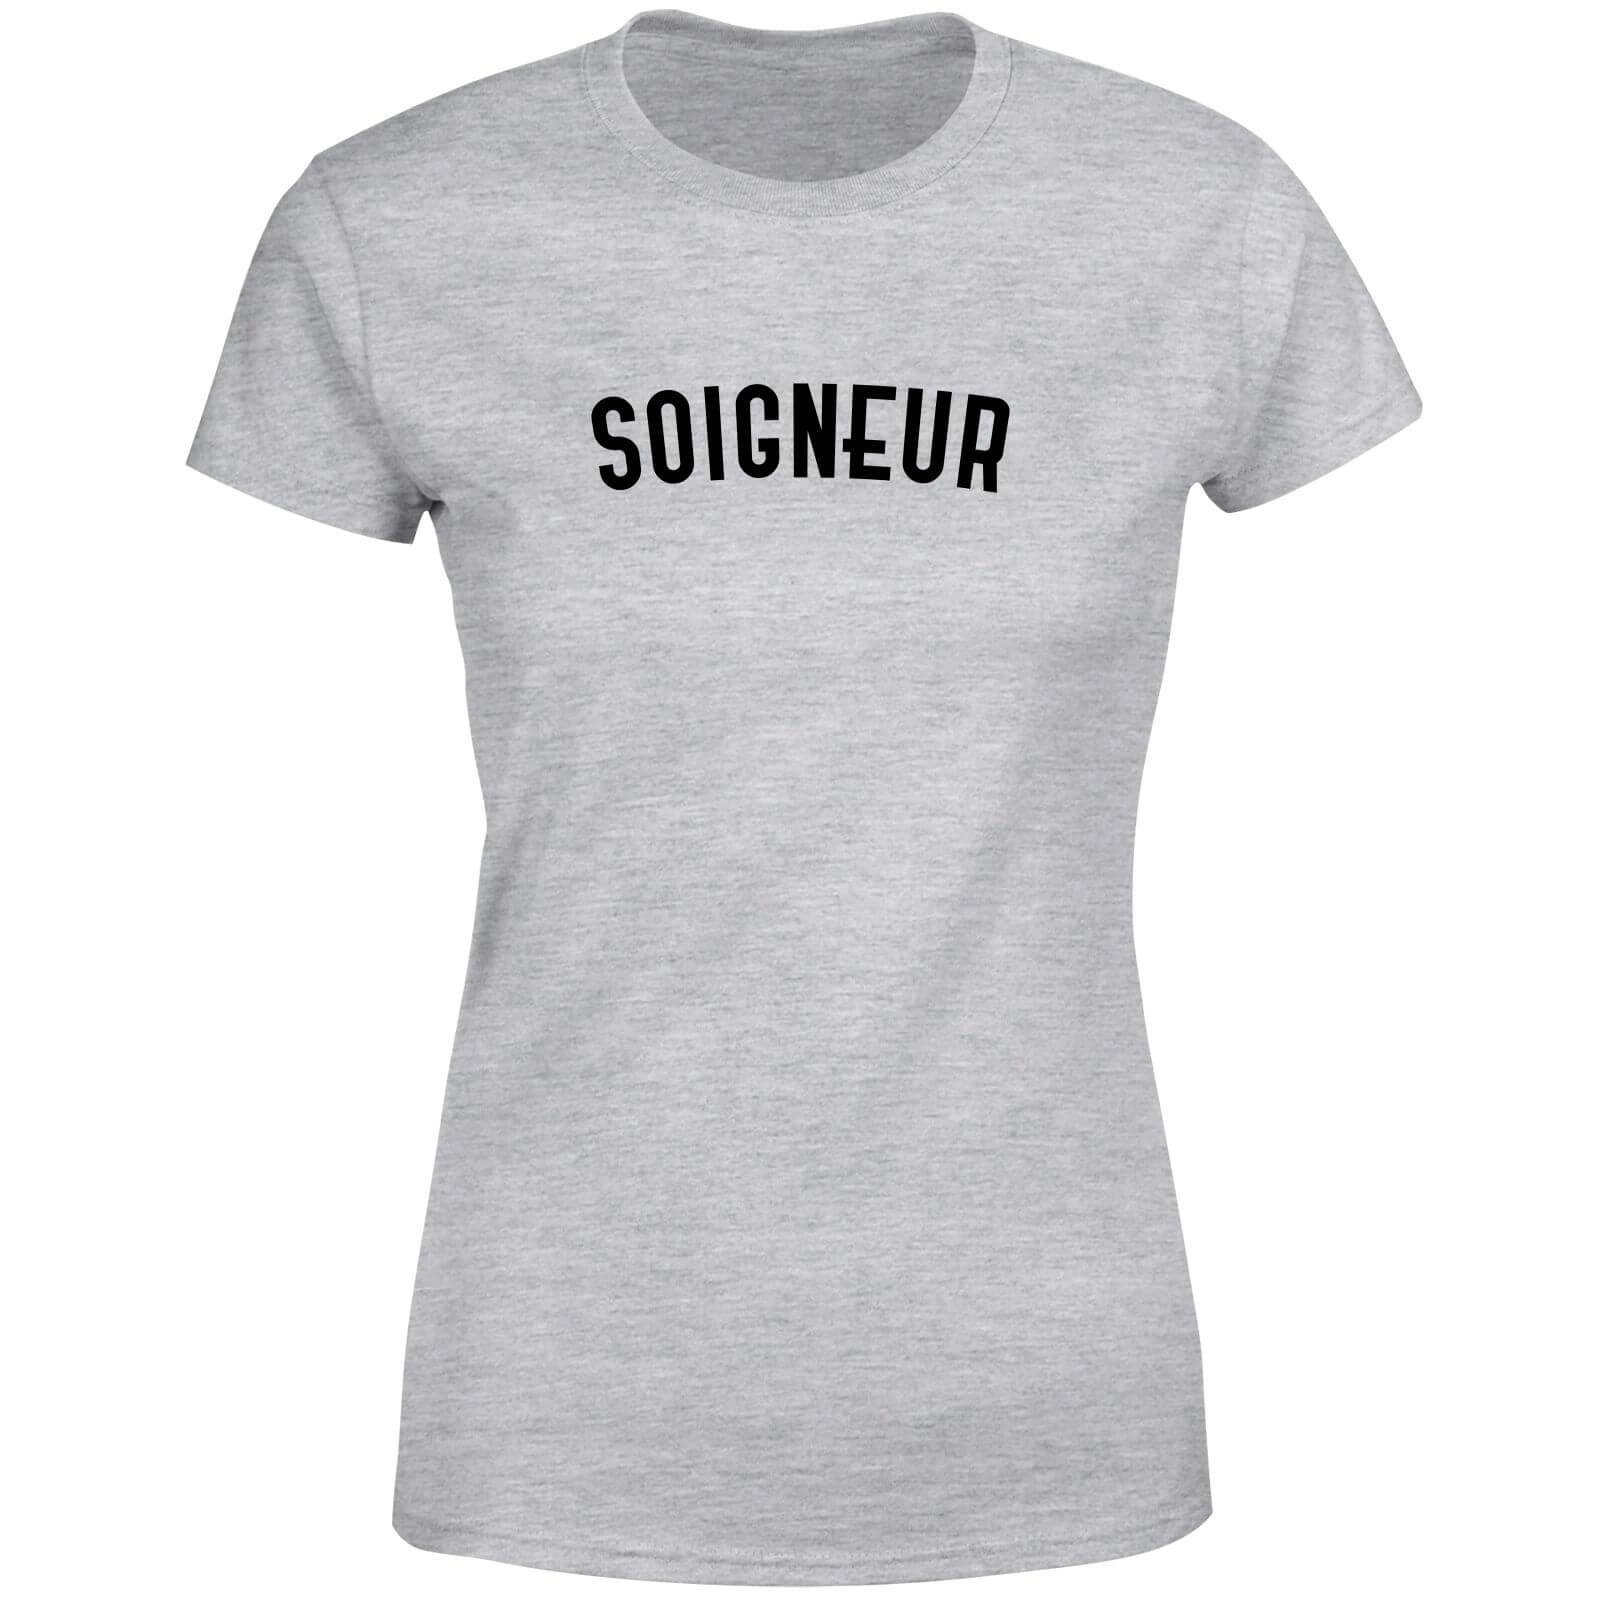 Soigneur Women's T-Shirt - Grey - S - Grey